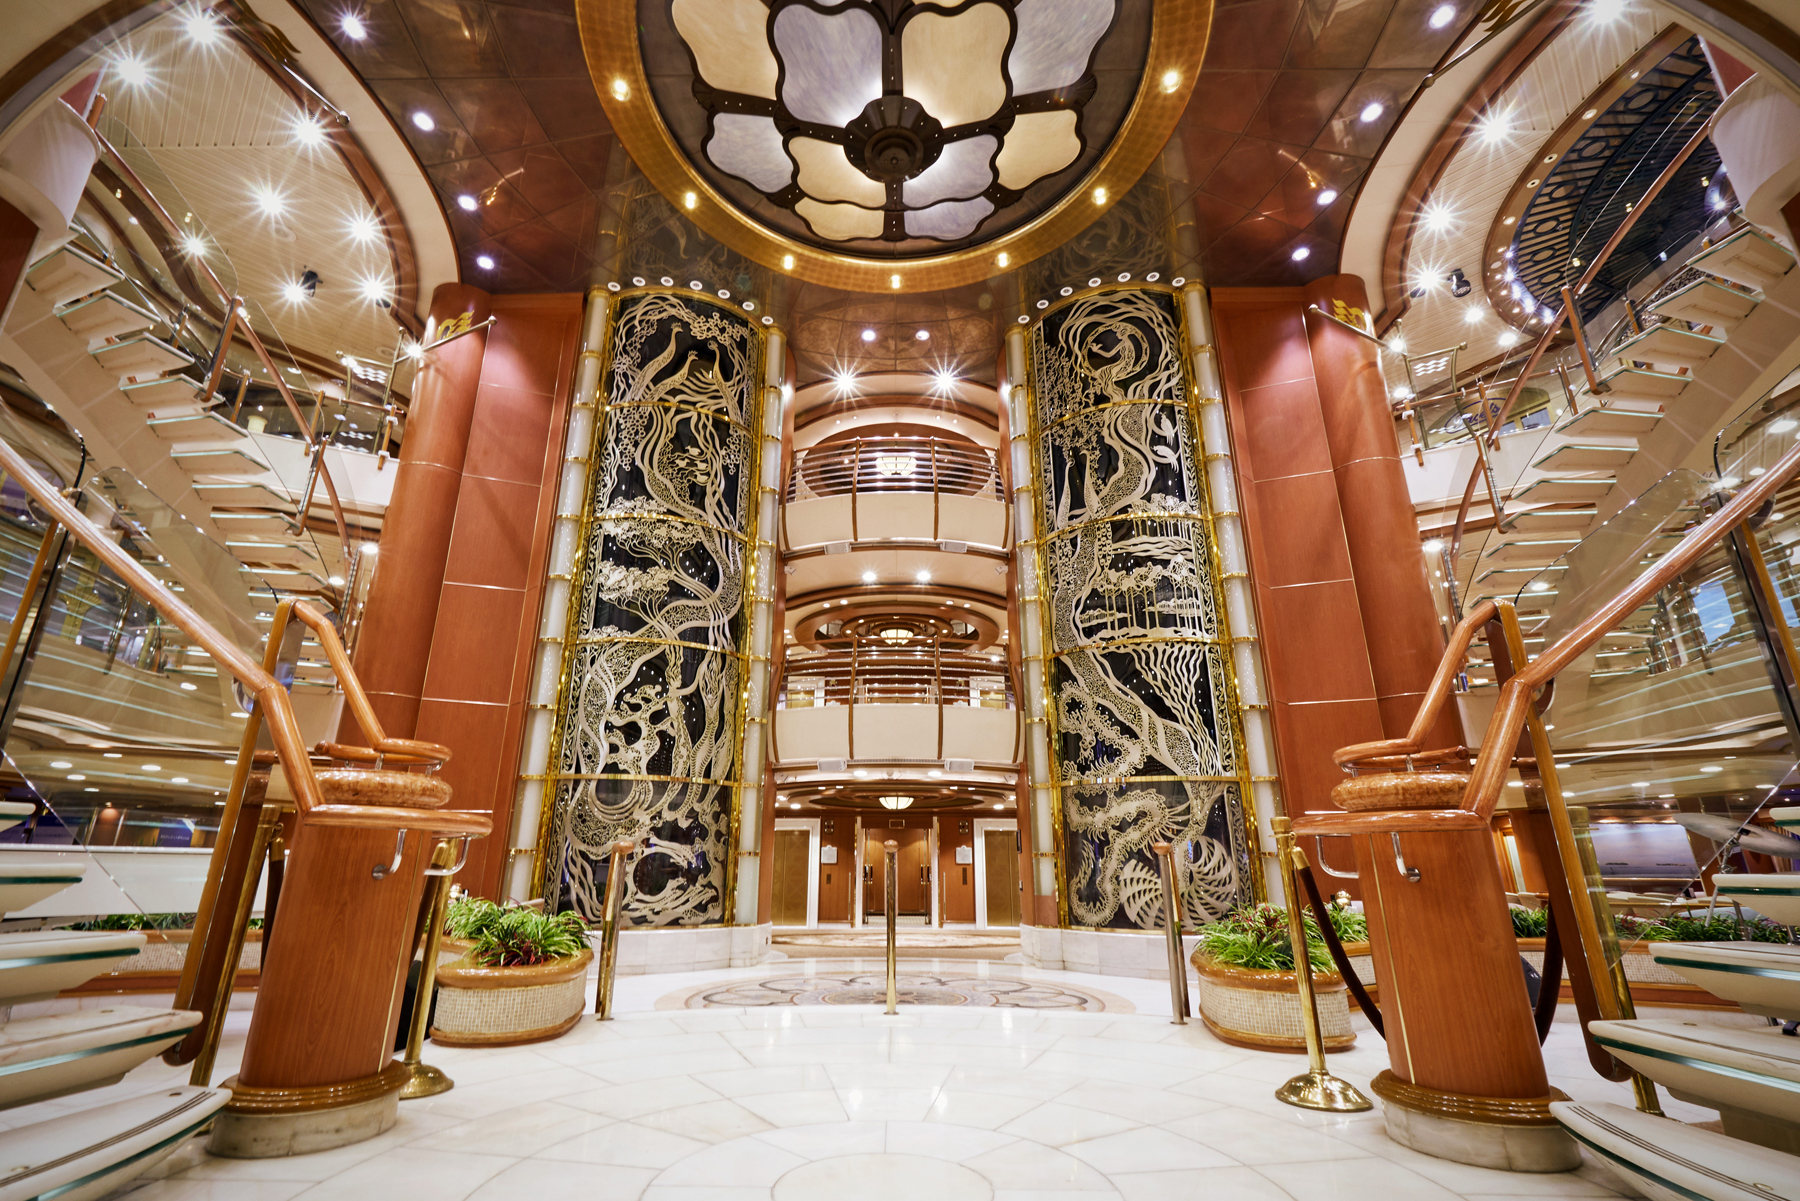 Atrium on a Princess Cruise ship (source: Princess Cruises)